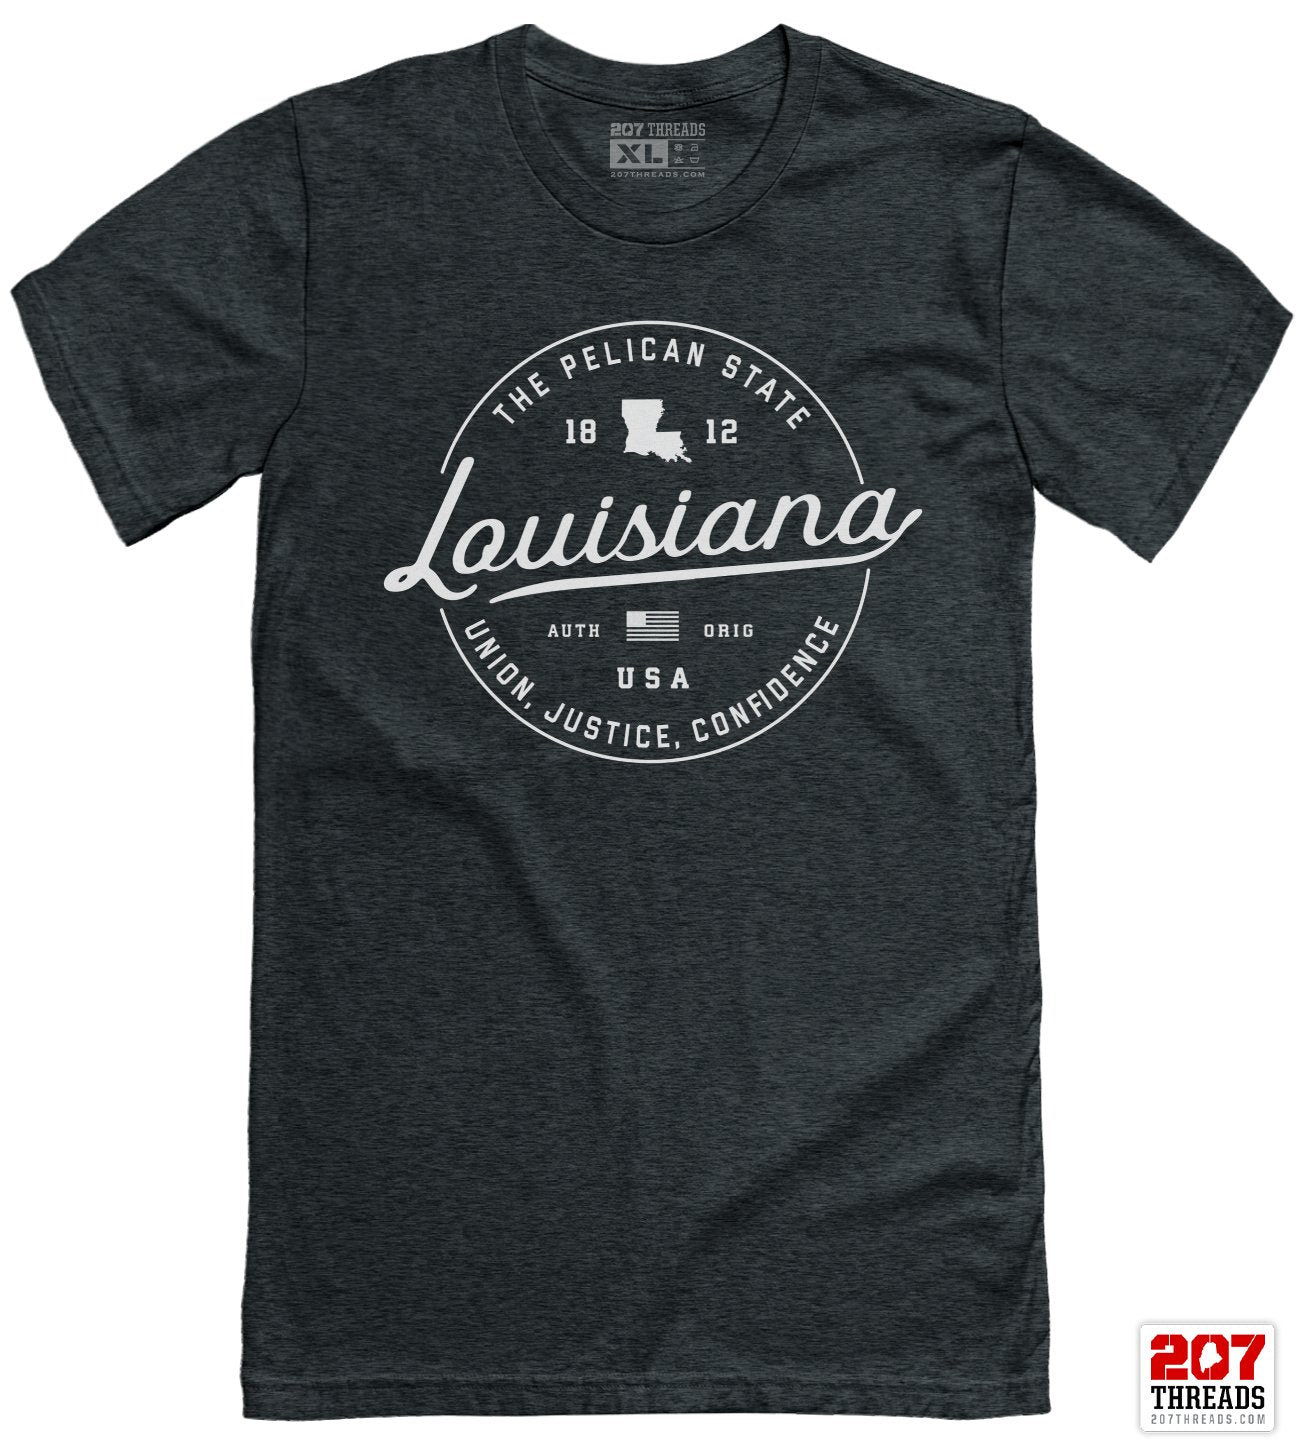 State of Louisiana T-Shirt - Soft Louisiana Tee